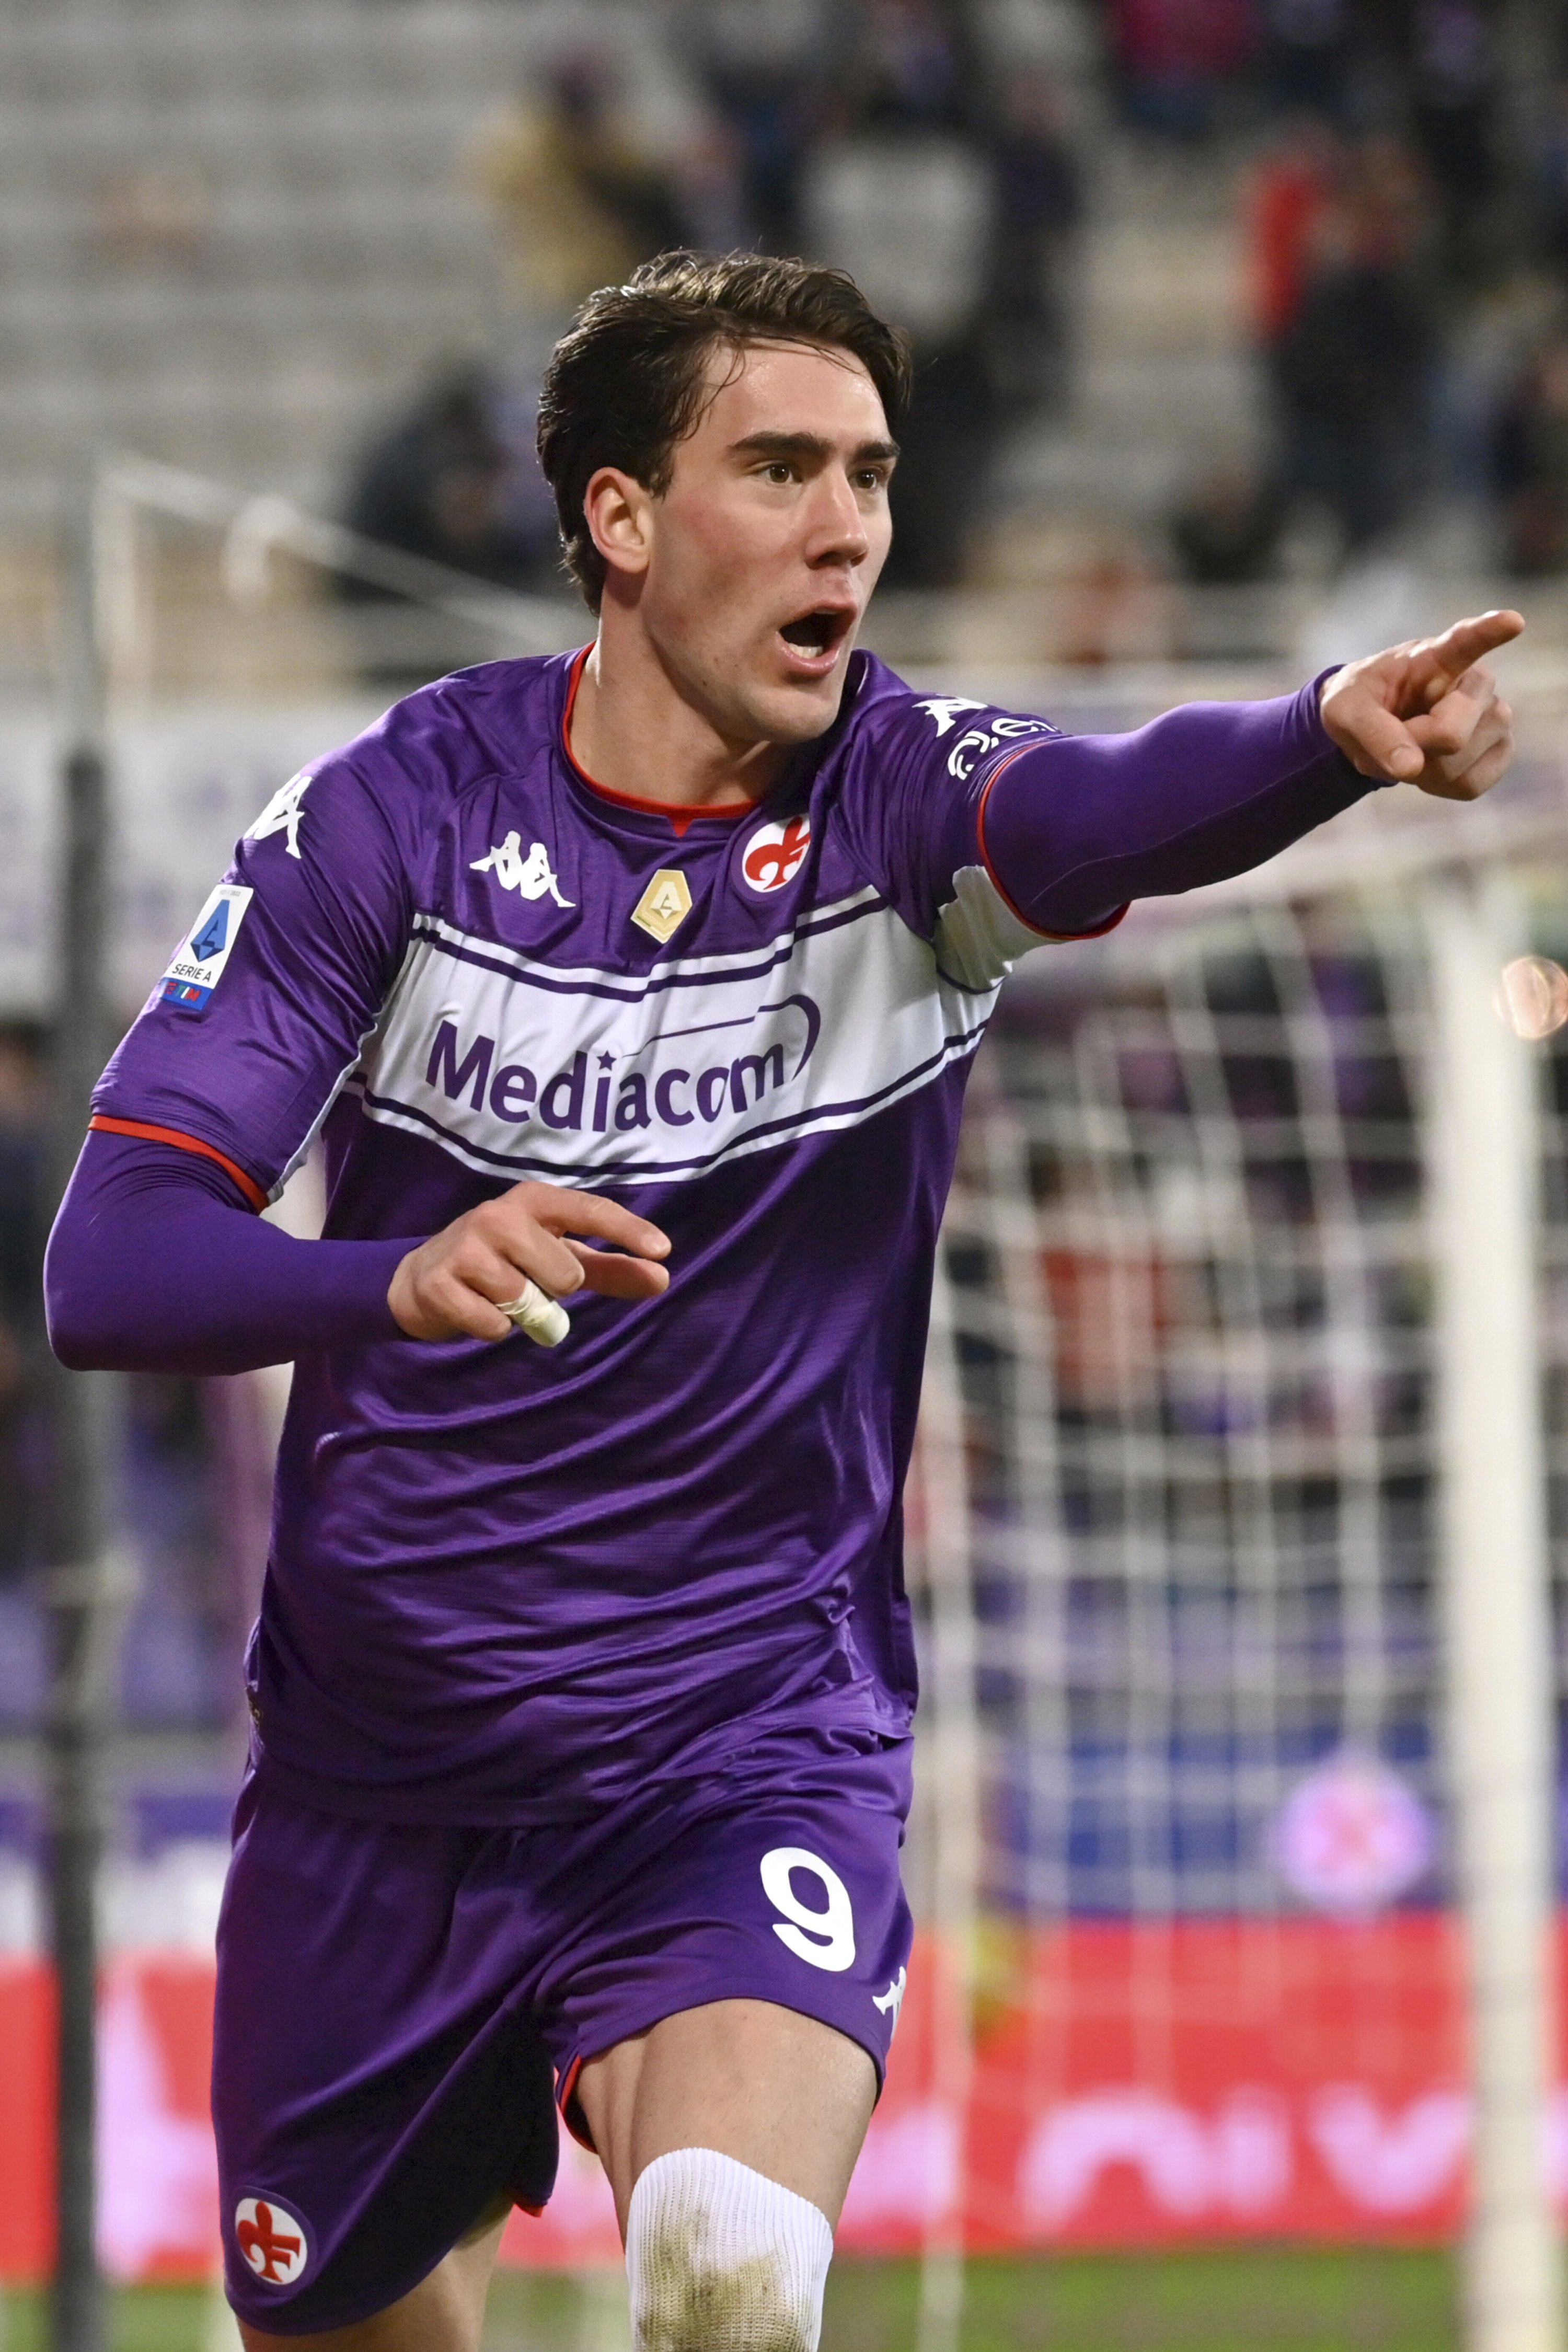 Fiorentina's Dusan Vlahovic celebrates scoring in a Serie A match against Salernitana, Florence, Italy, Dec. 11, 2021. (AP Photo)